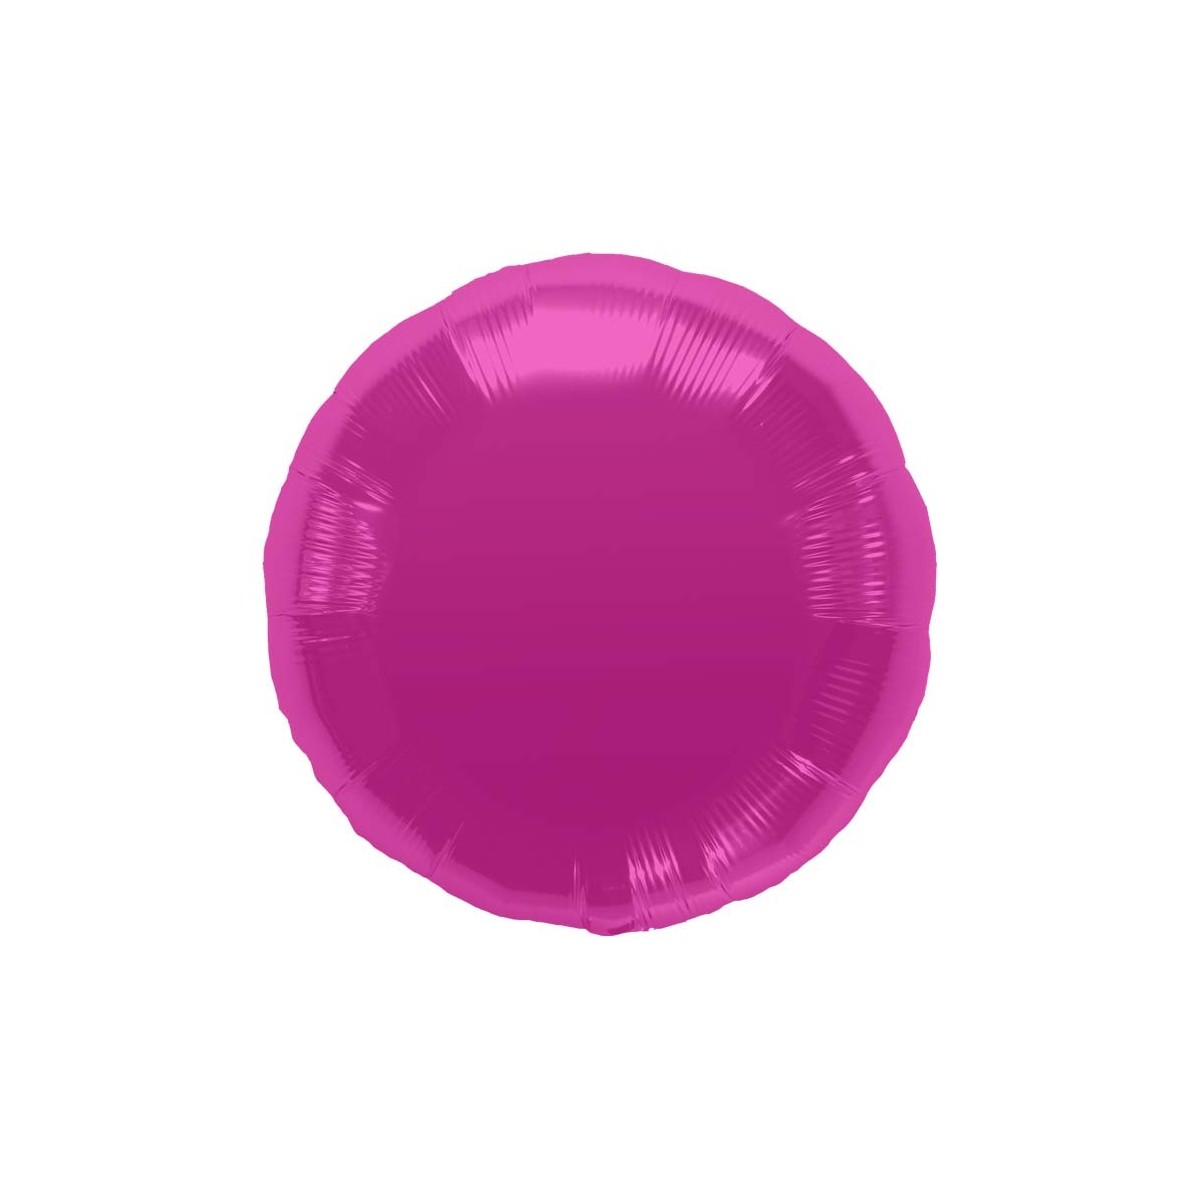 Ballon mylar rond rose pastel